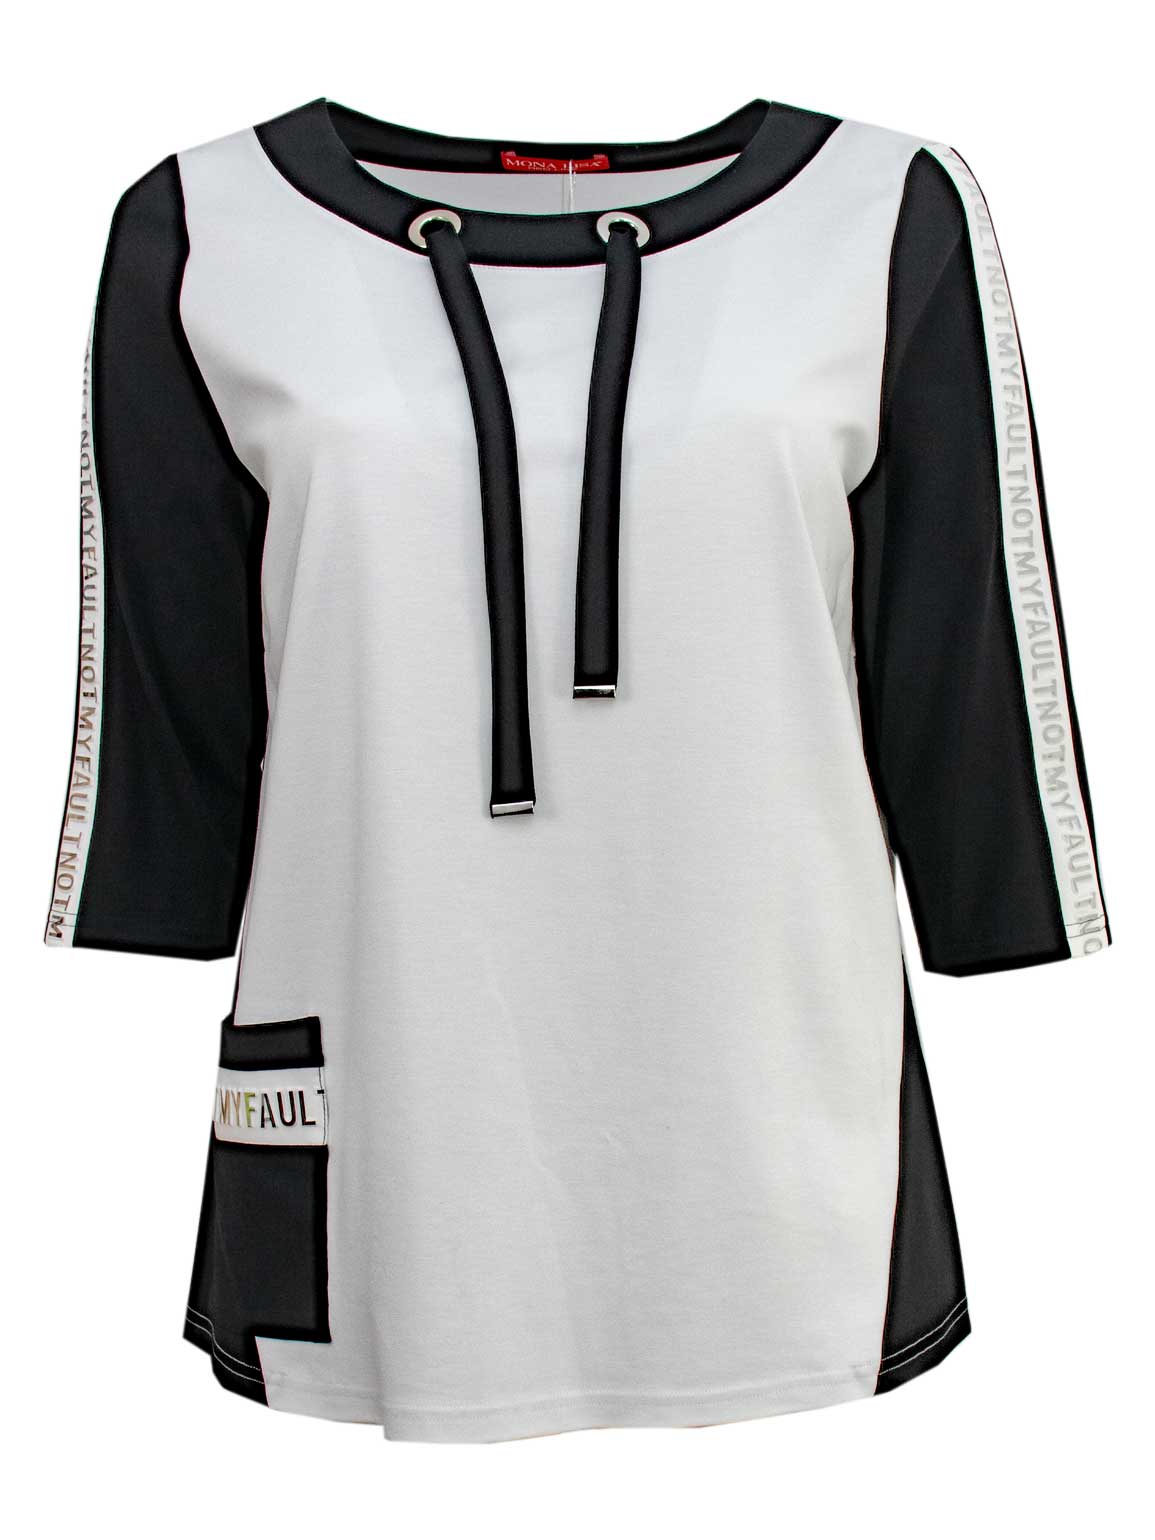 Mona Lisa Sweatshirt Jersey Wording black&white